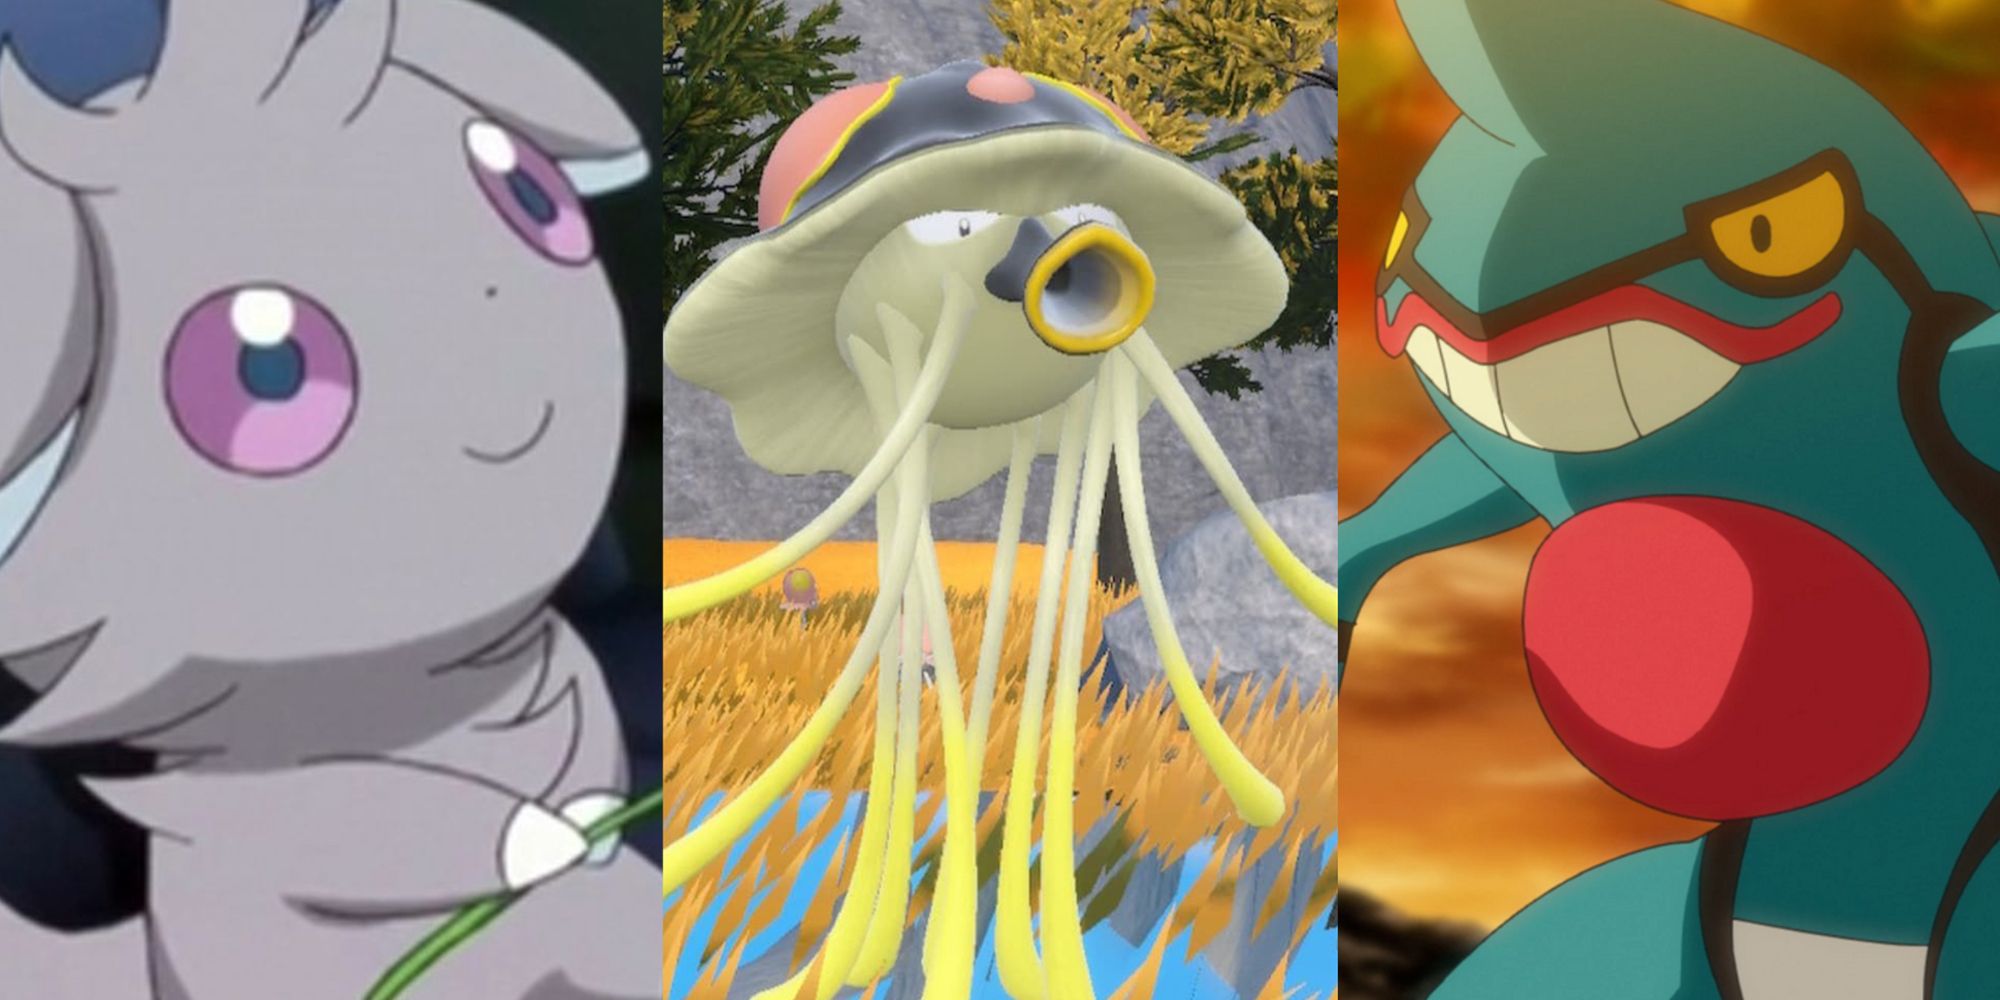 Espurr, Toedscruel, and Toxicruel from Pokemon